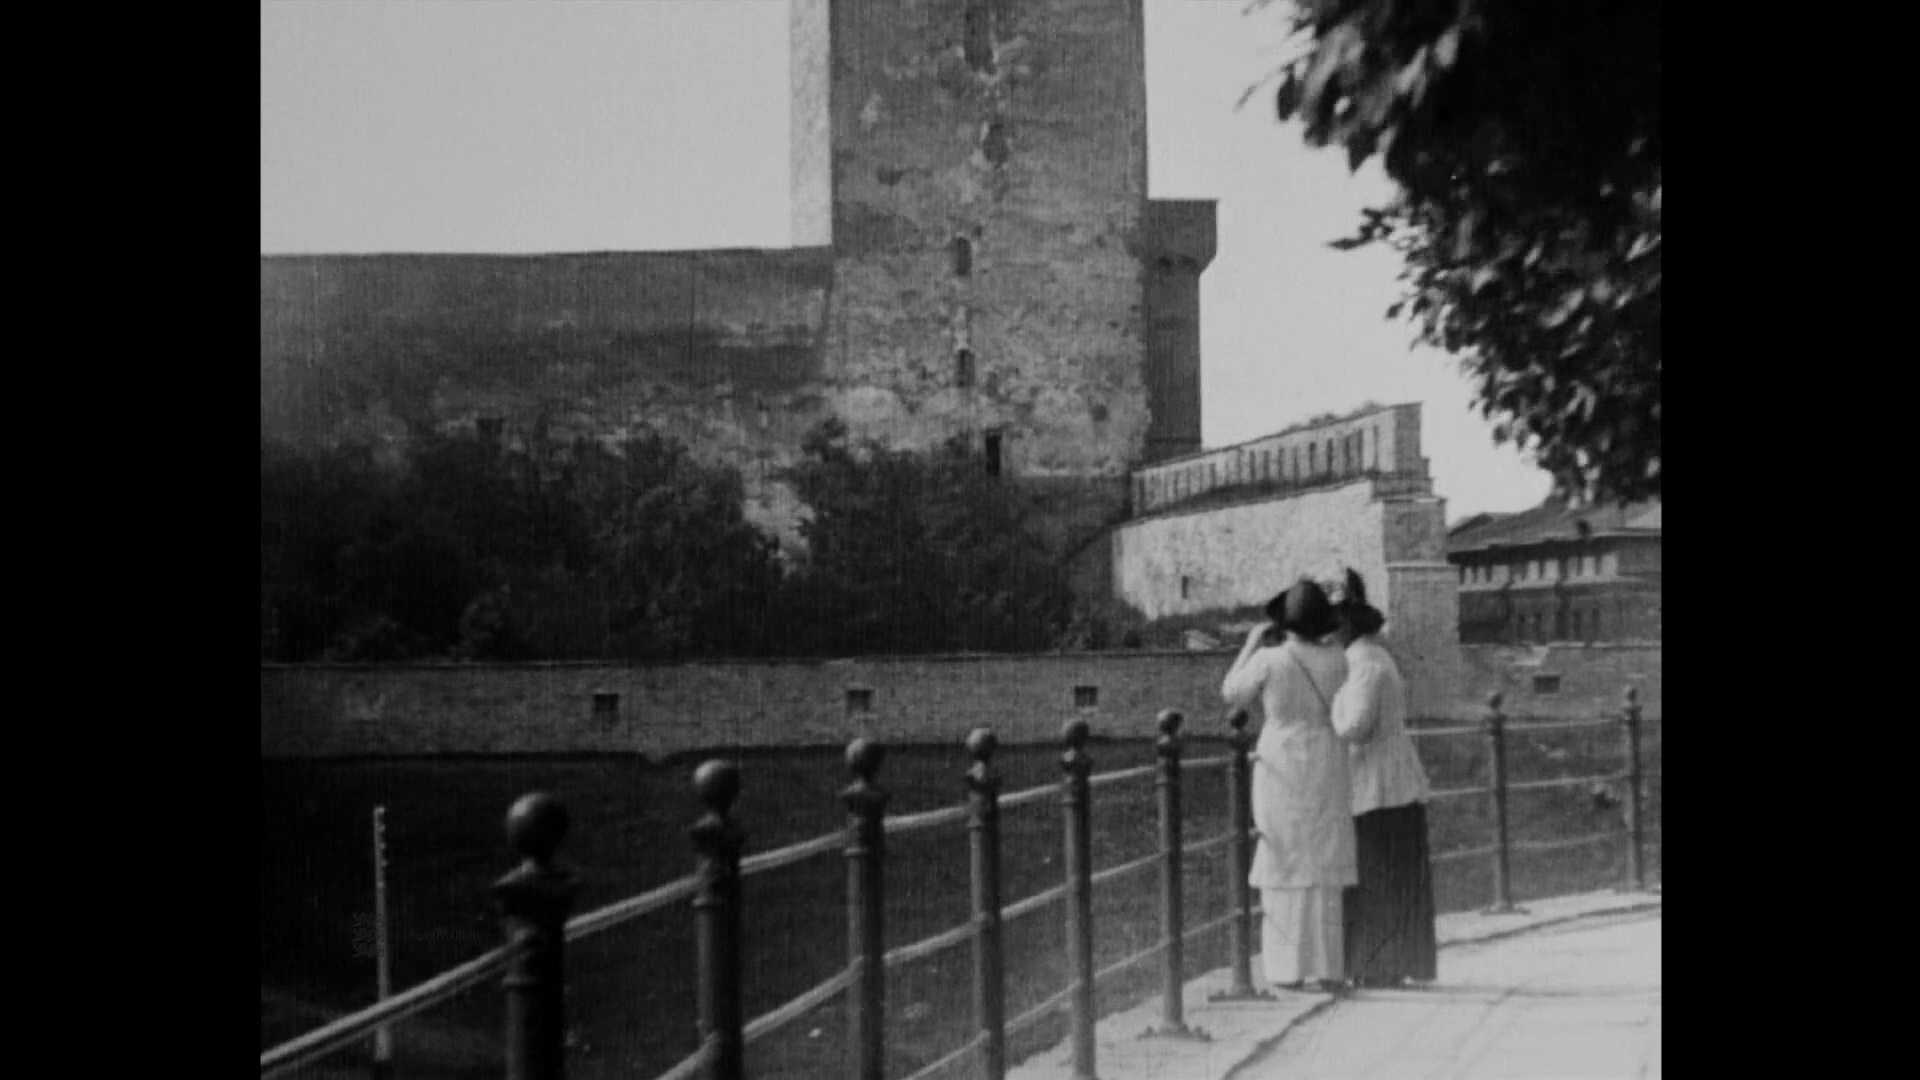 Film "Historic Memories of the Minewist of Estonia" 0:08:02.023